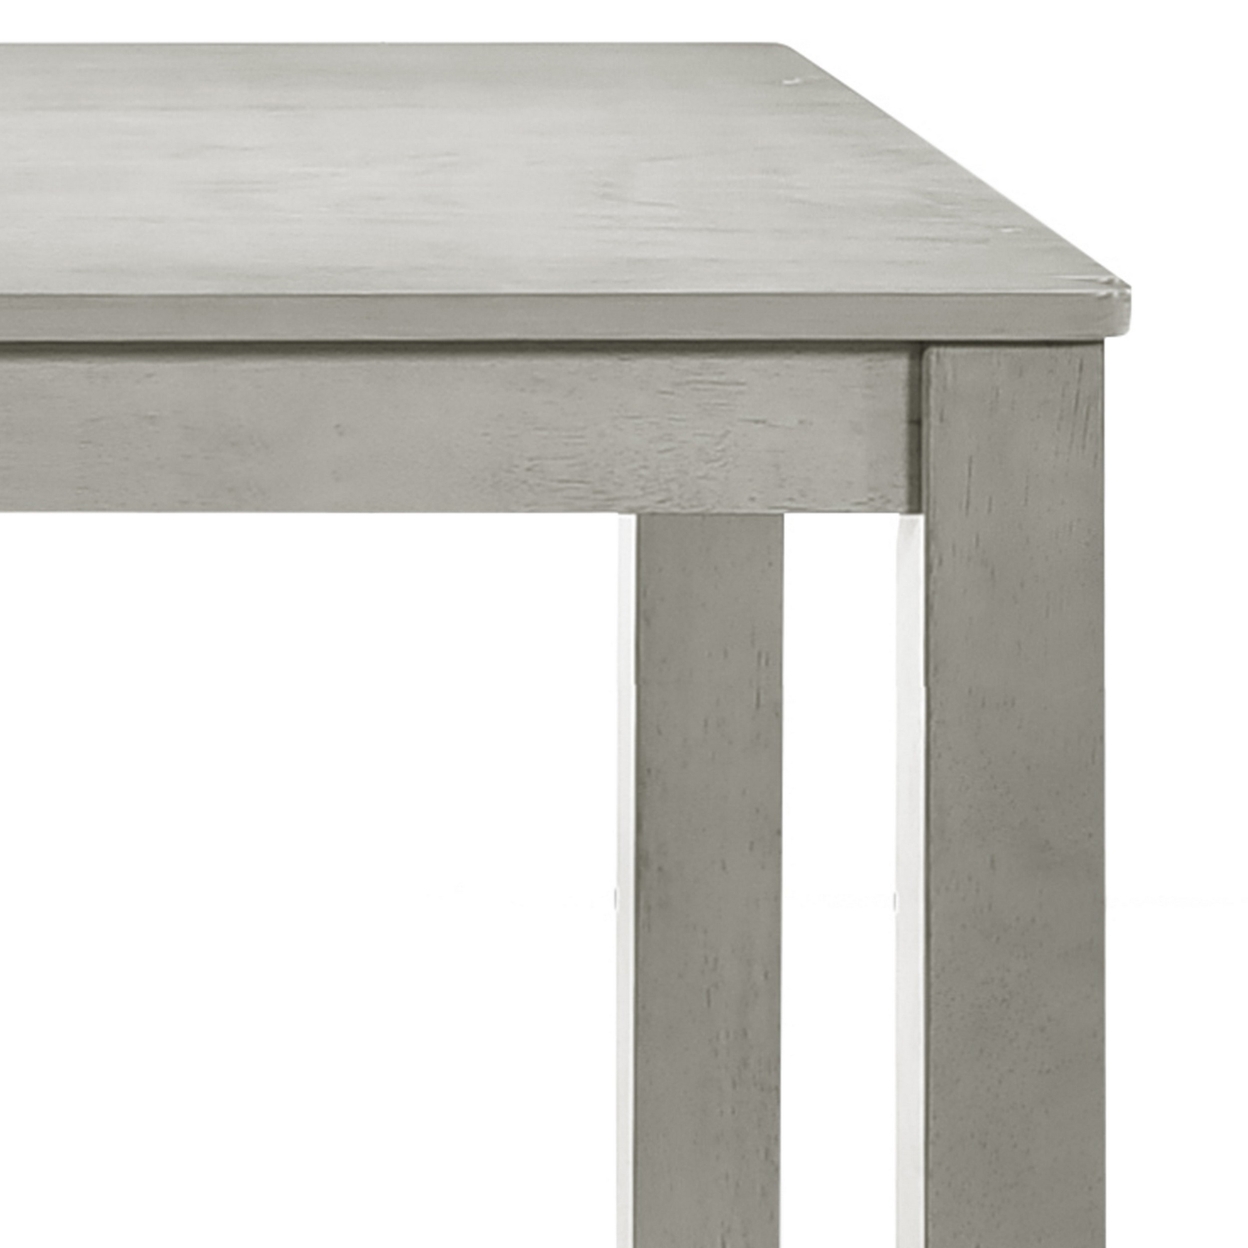 Pane 59 Inch Rectangular Wood Dining Table, Smooth Gray, Tall Block Legs - Saltoro Sherpi